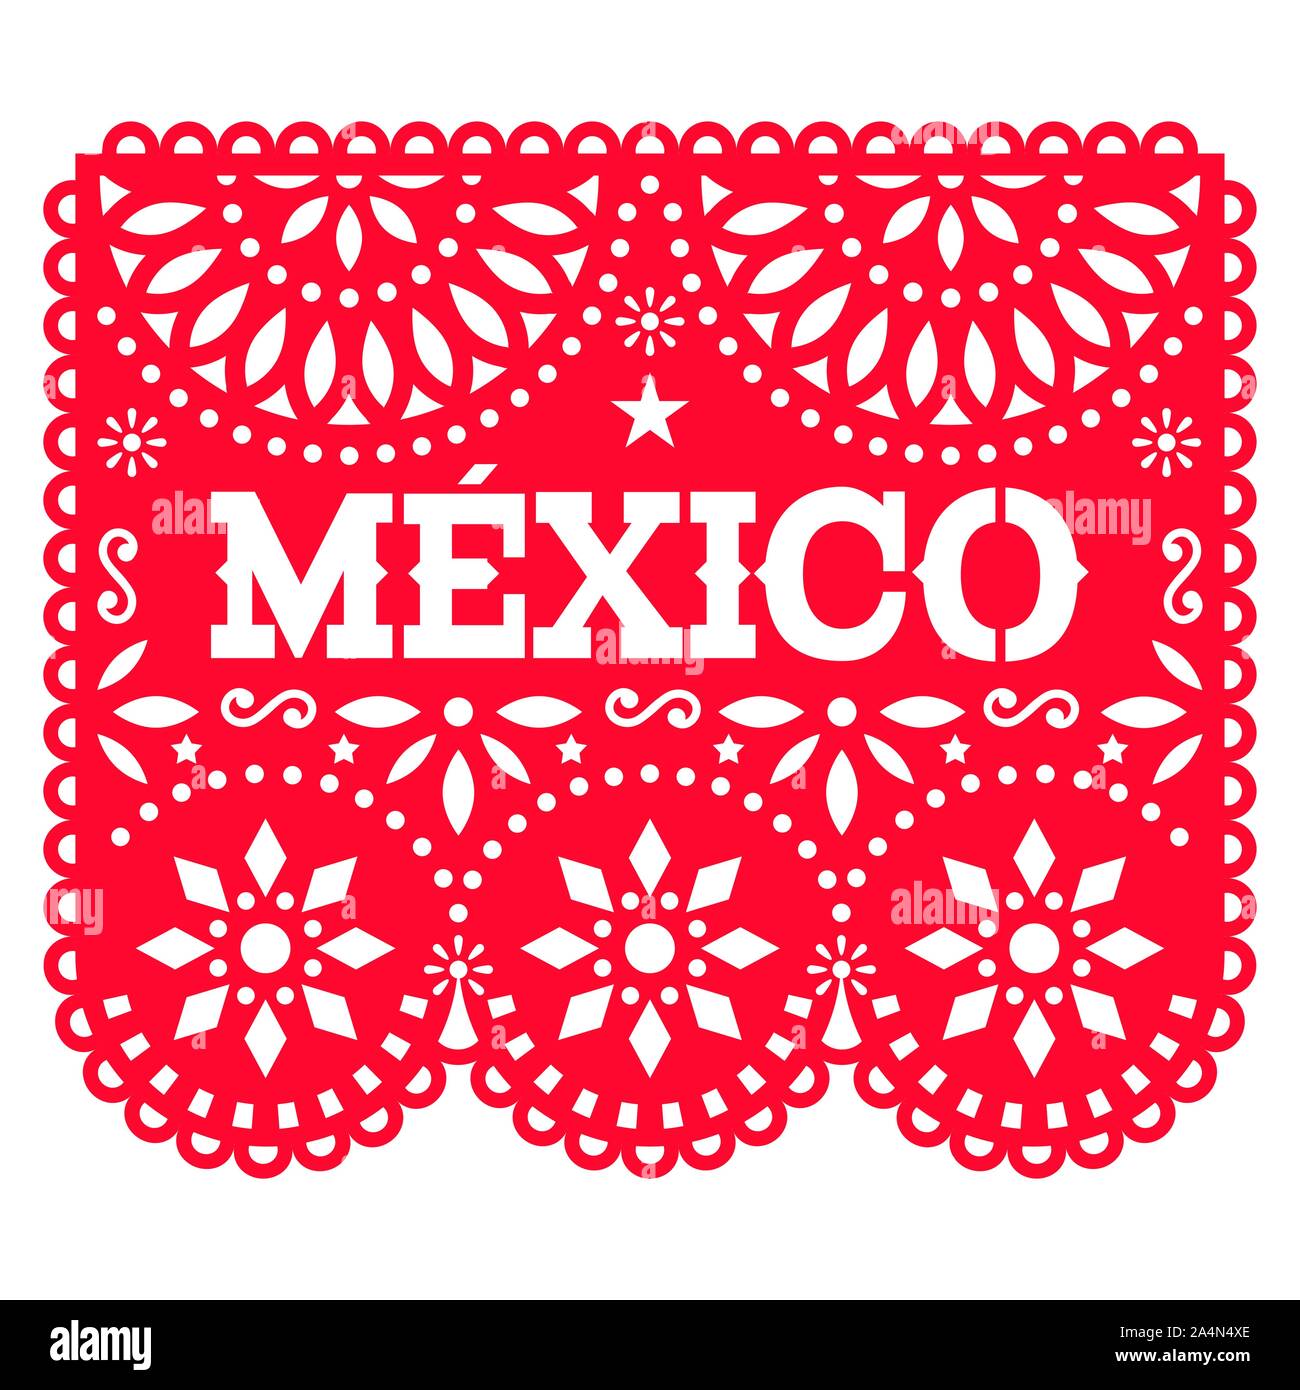 Papel Picado Mexico vector design, retro Mexican paper cutout party decorations pattern - Cinco de Mayo celebration Stock Vector